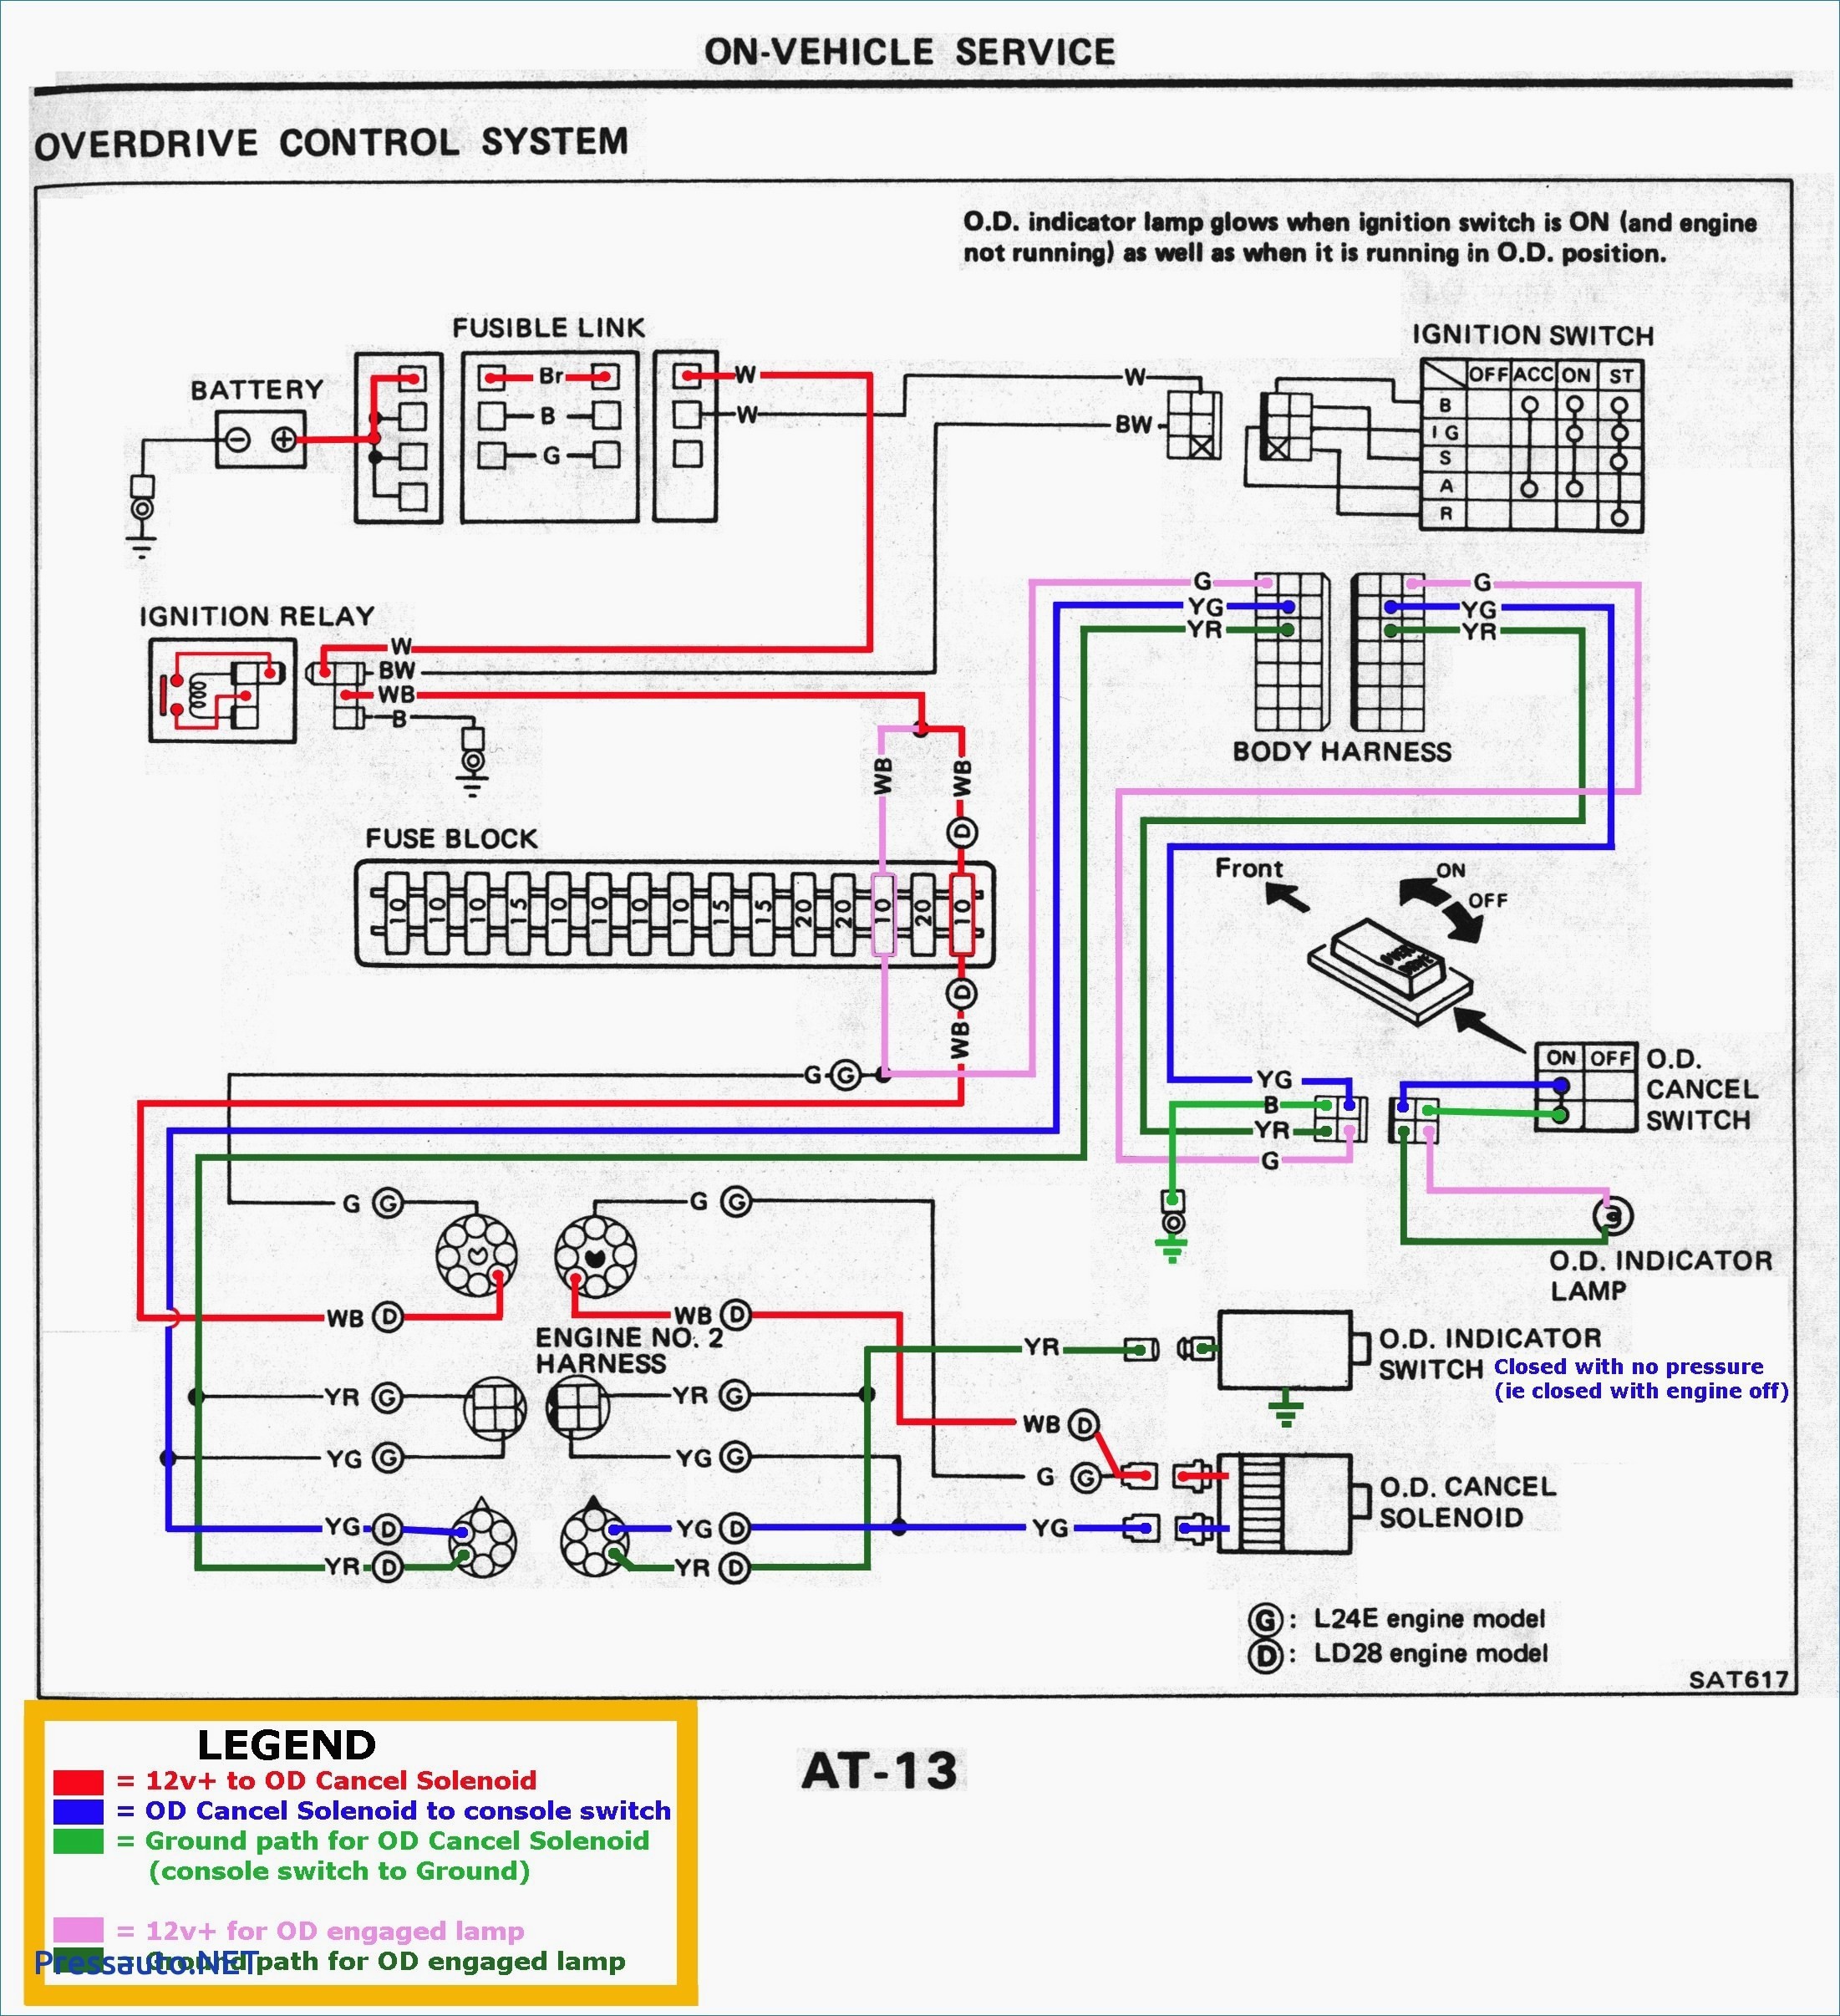 Free Wiring Diagram Automotive New Automotive Wiring Diagram Line Fresh Free Vehicle Wiring Diagrams